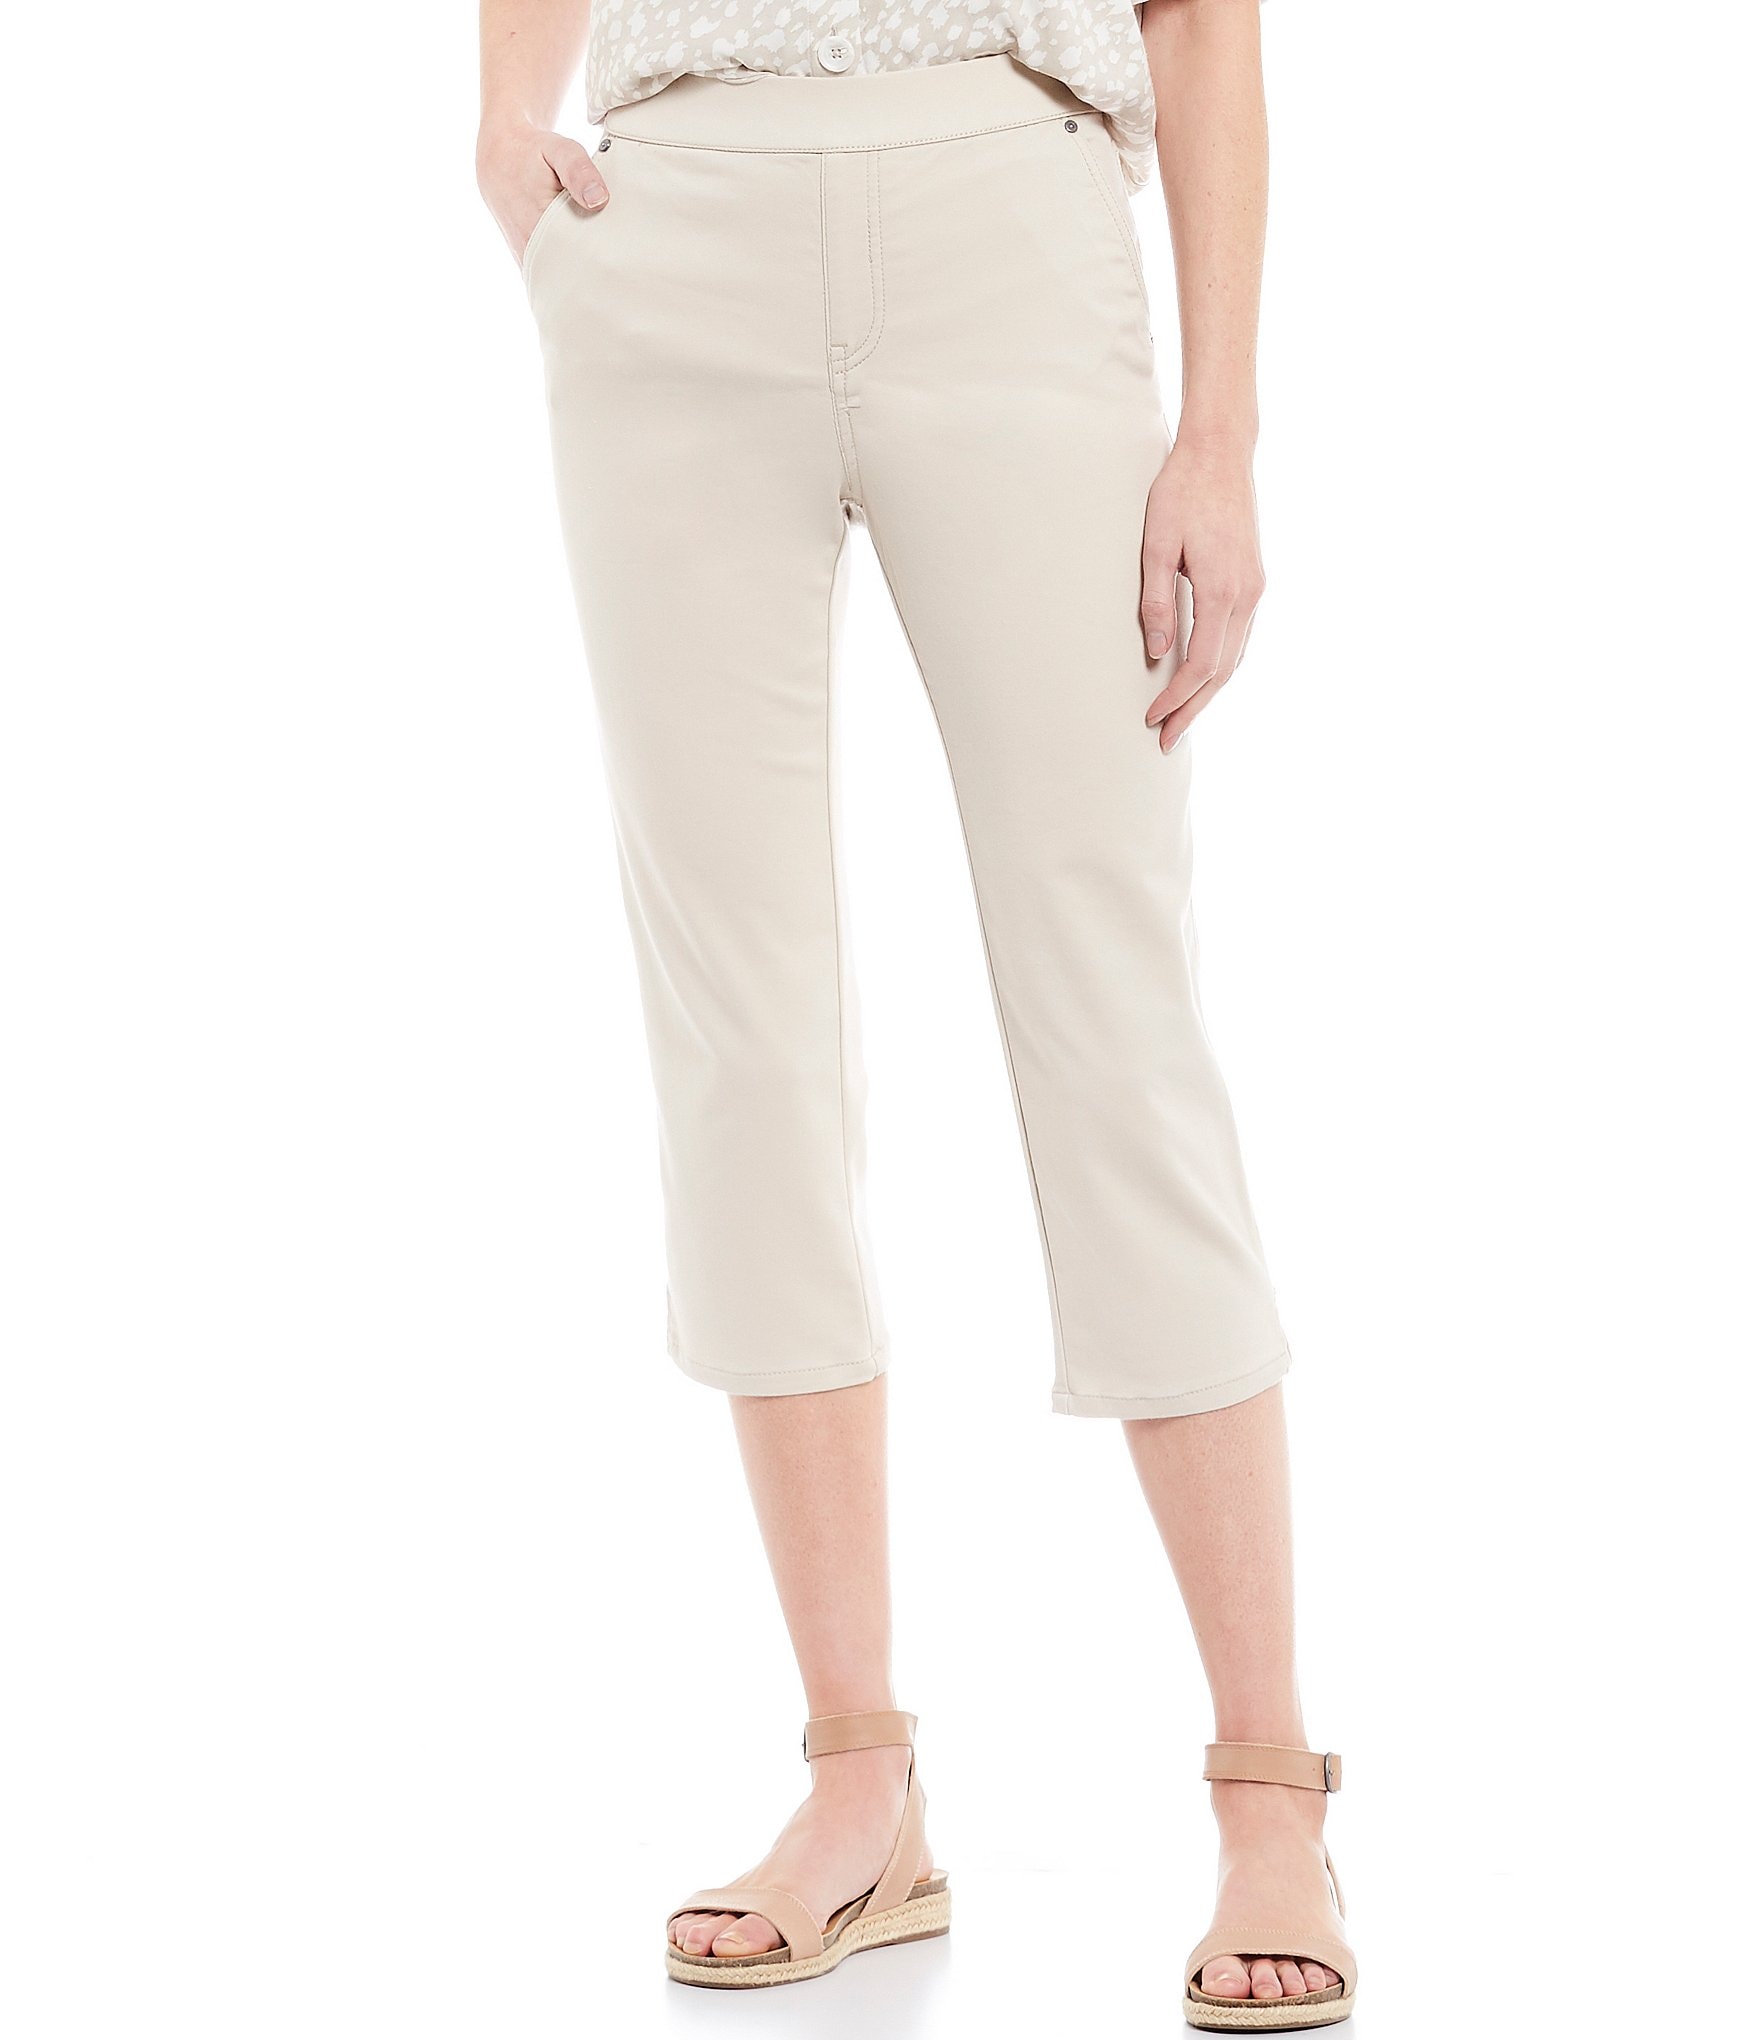 Buy the NWT Womens Tan Flat Front Stretch Pockets Straight Leg Capri Pants  Size 6